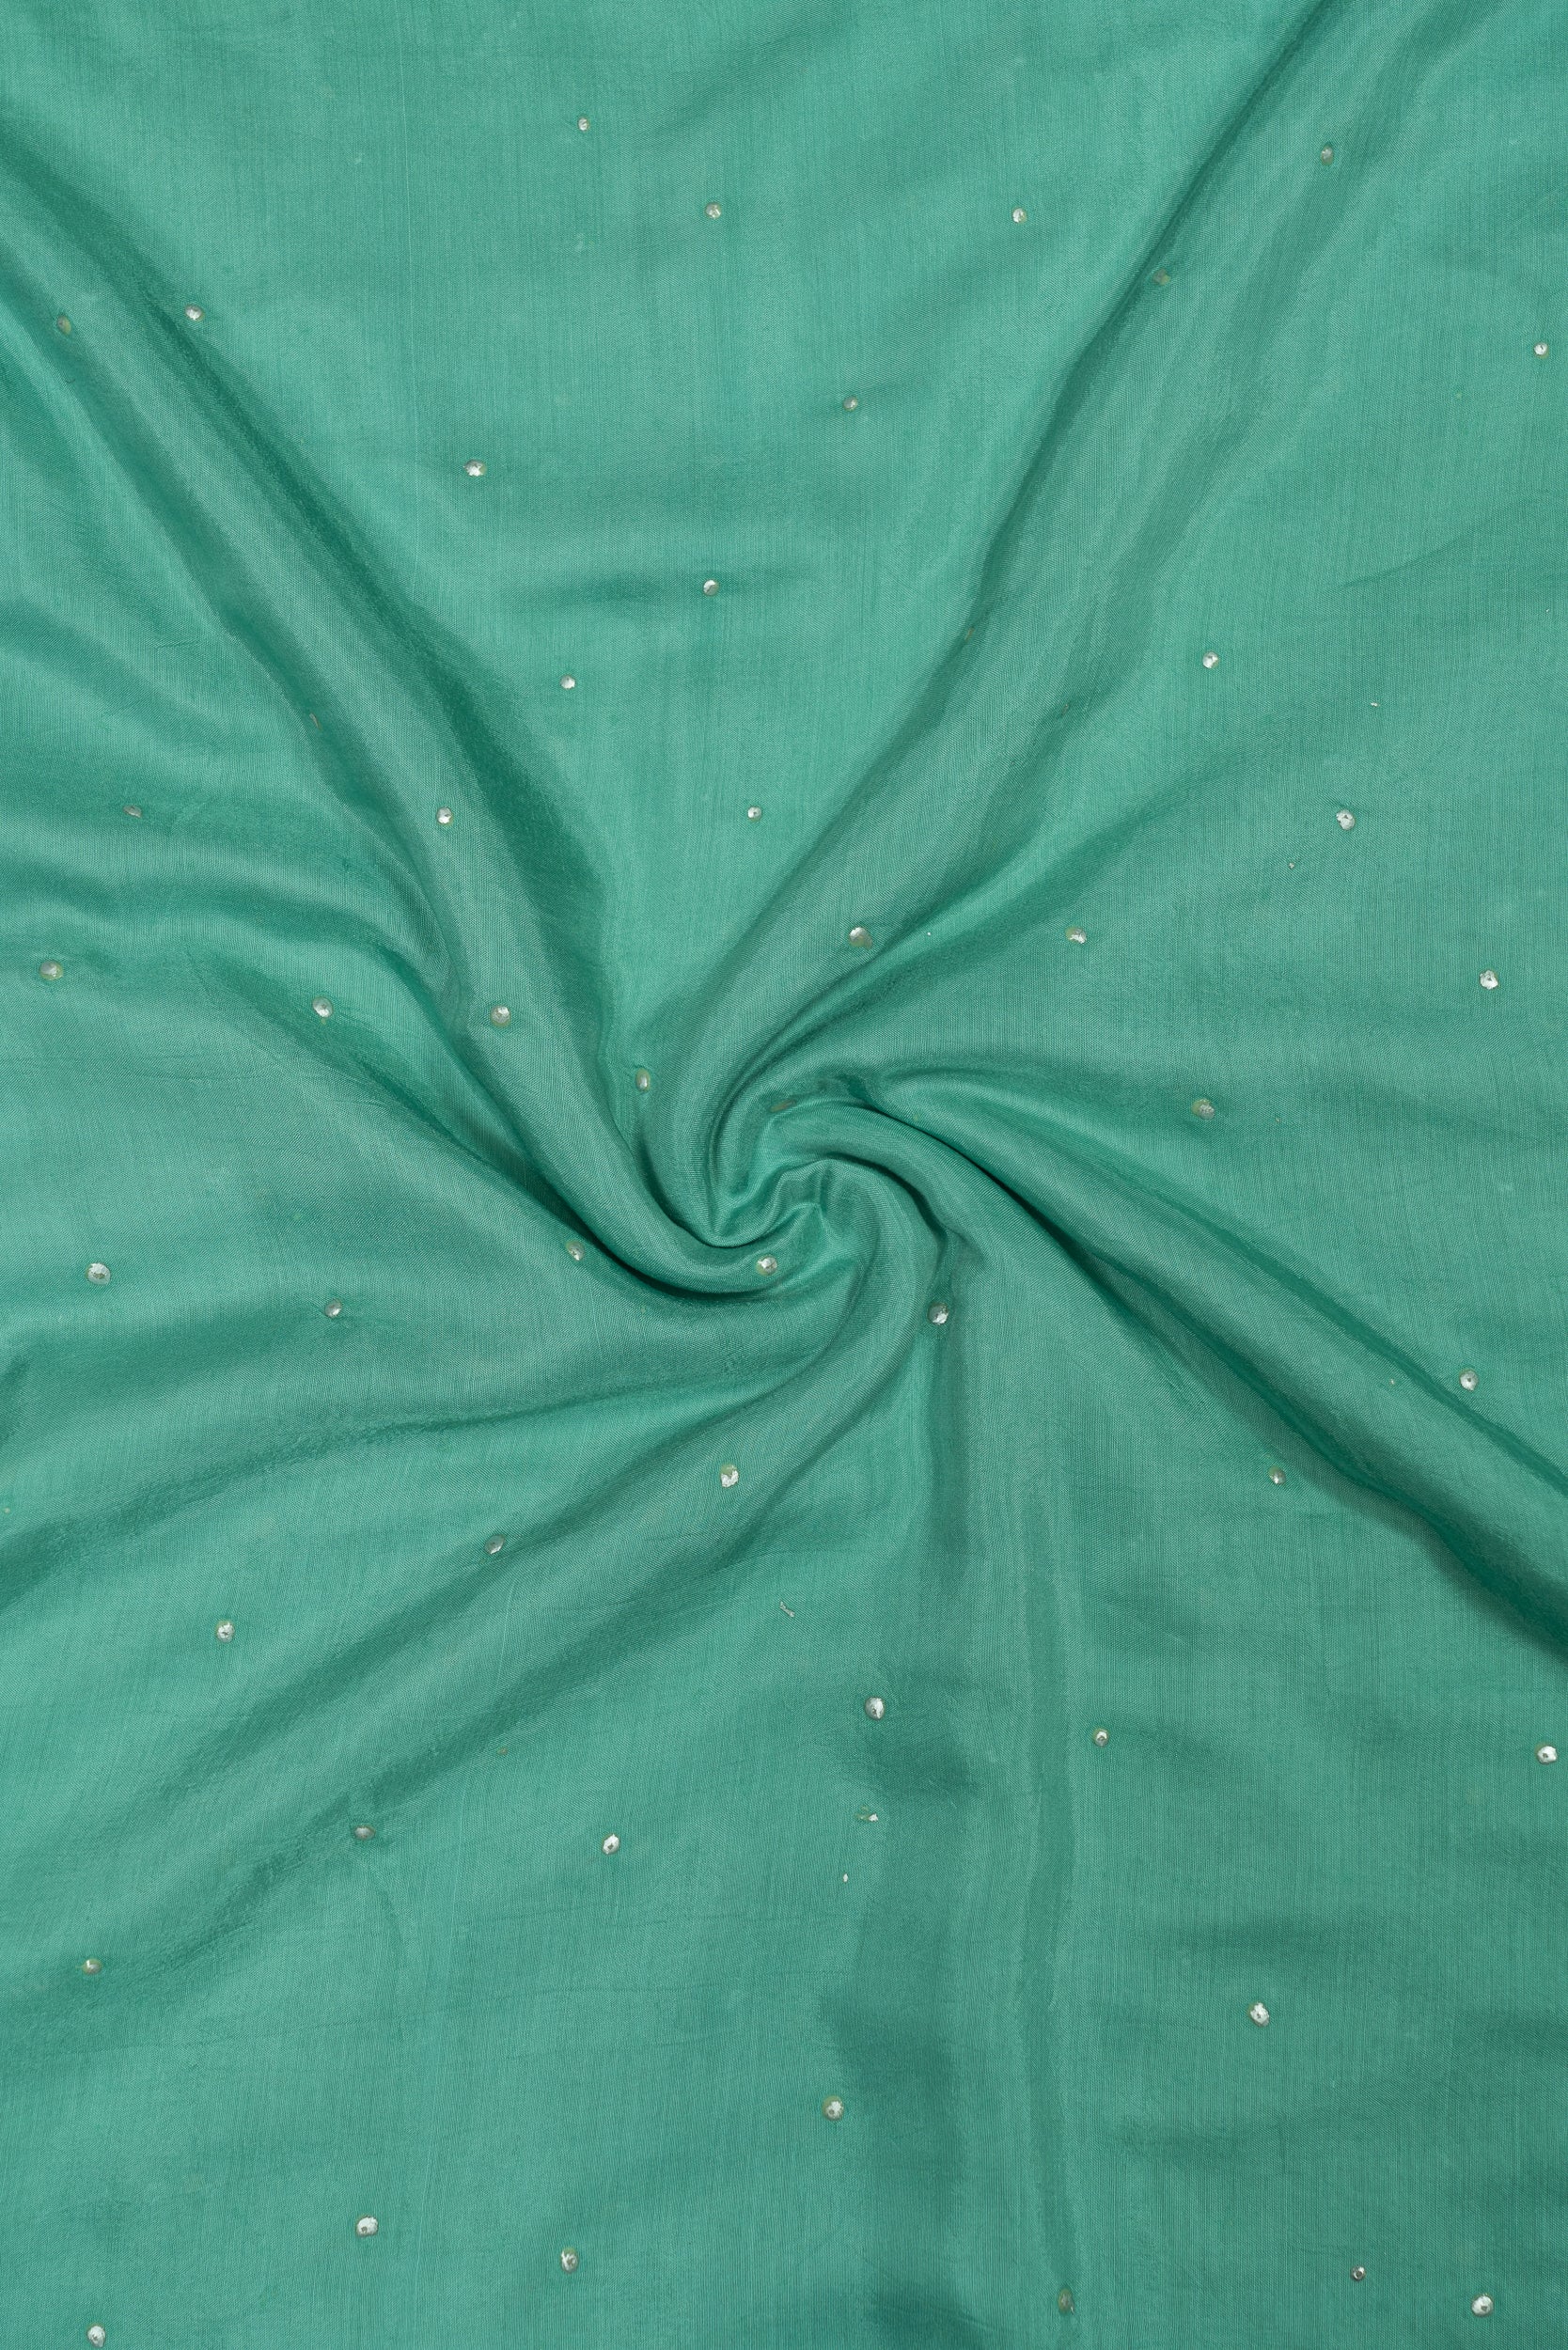 Cotton Silk Mukaish Dyed Fabric